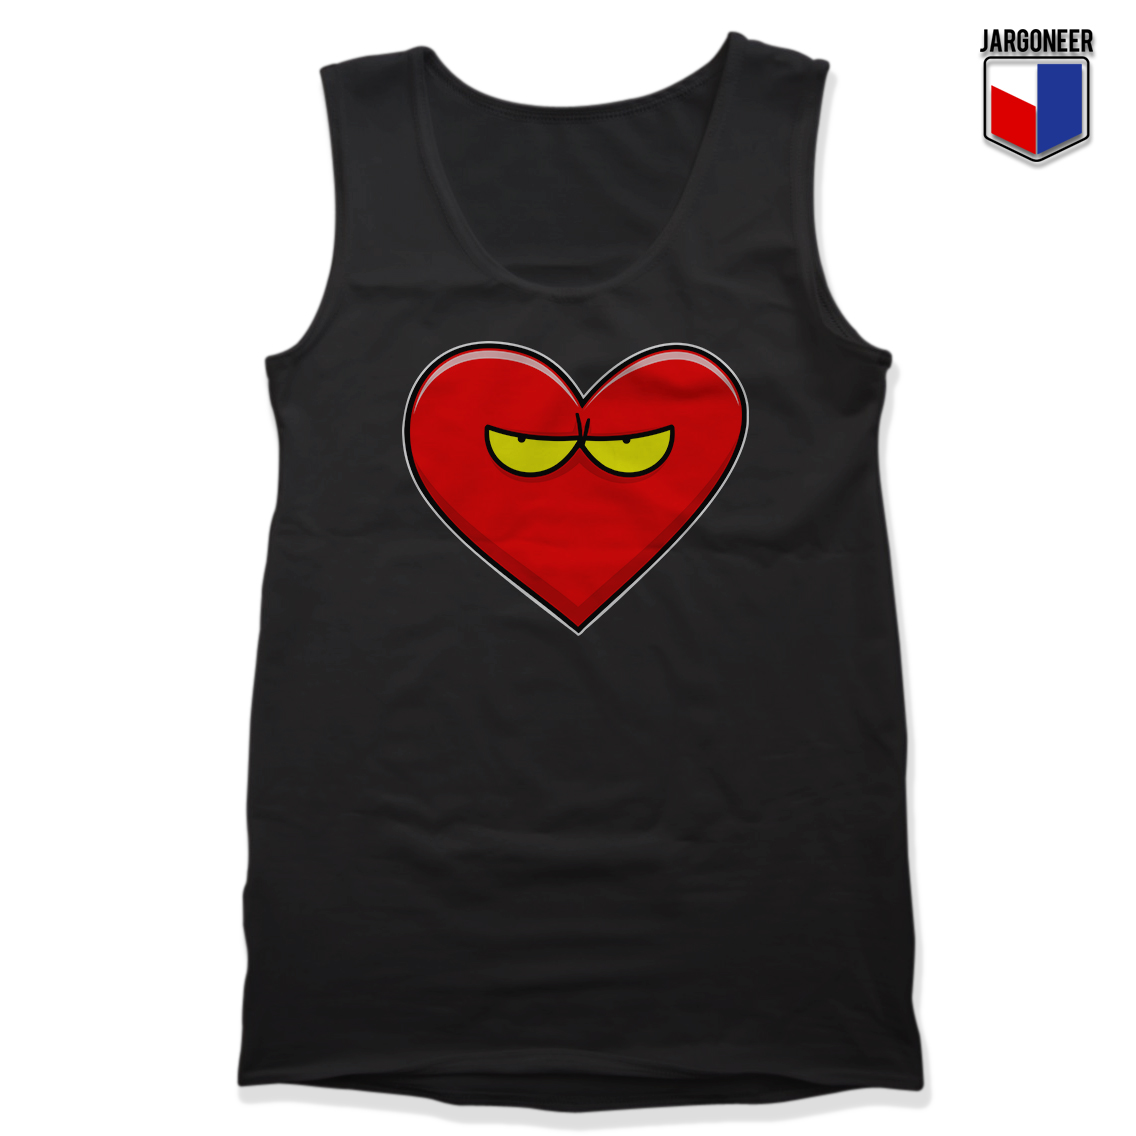 Angry Love Black Tank - Shop Unique Graphic Cool Shirt Designs